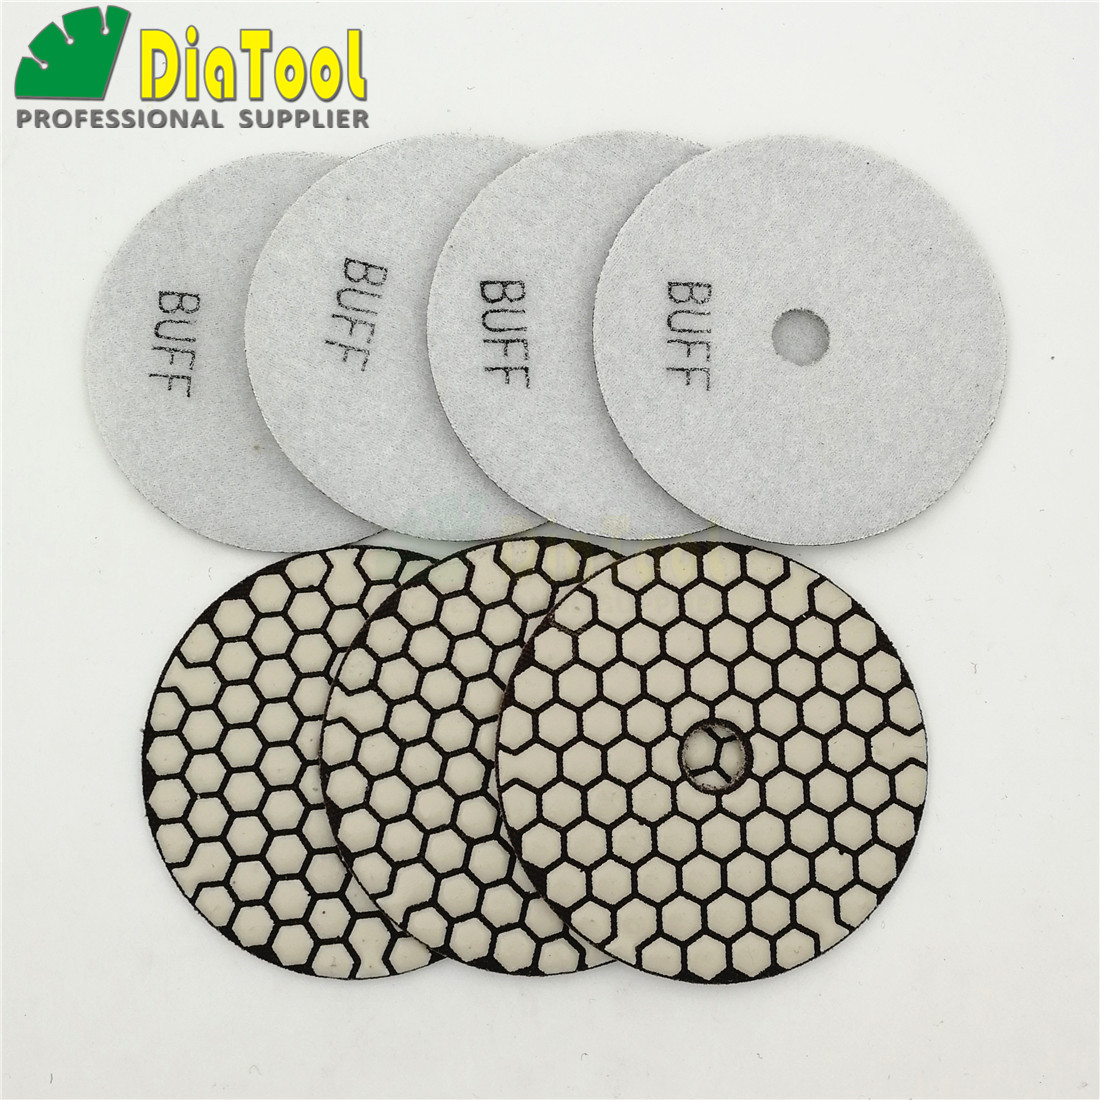 SHDIATOOL 7Pcs 4 Inch Dry Diamond Polishing Pads White Buff for Granite Marble Stone